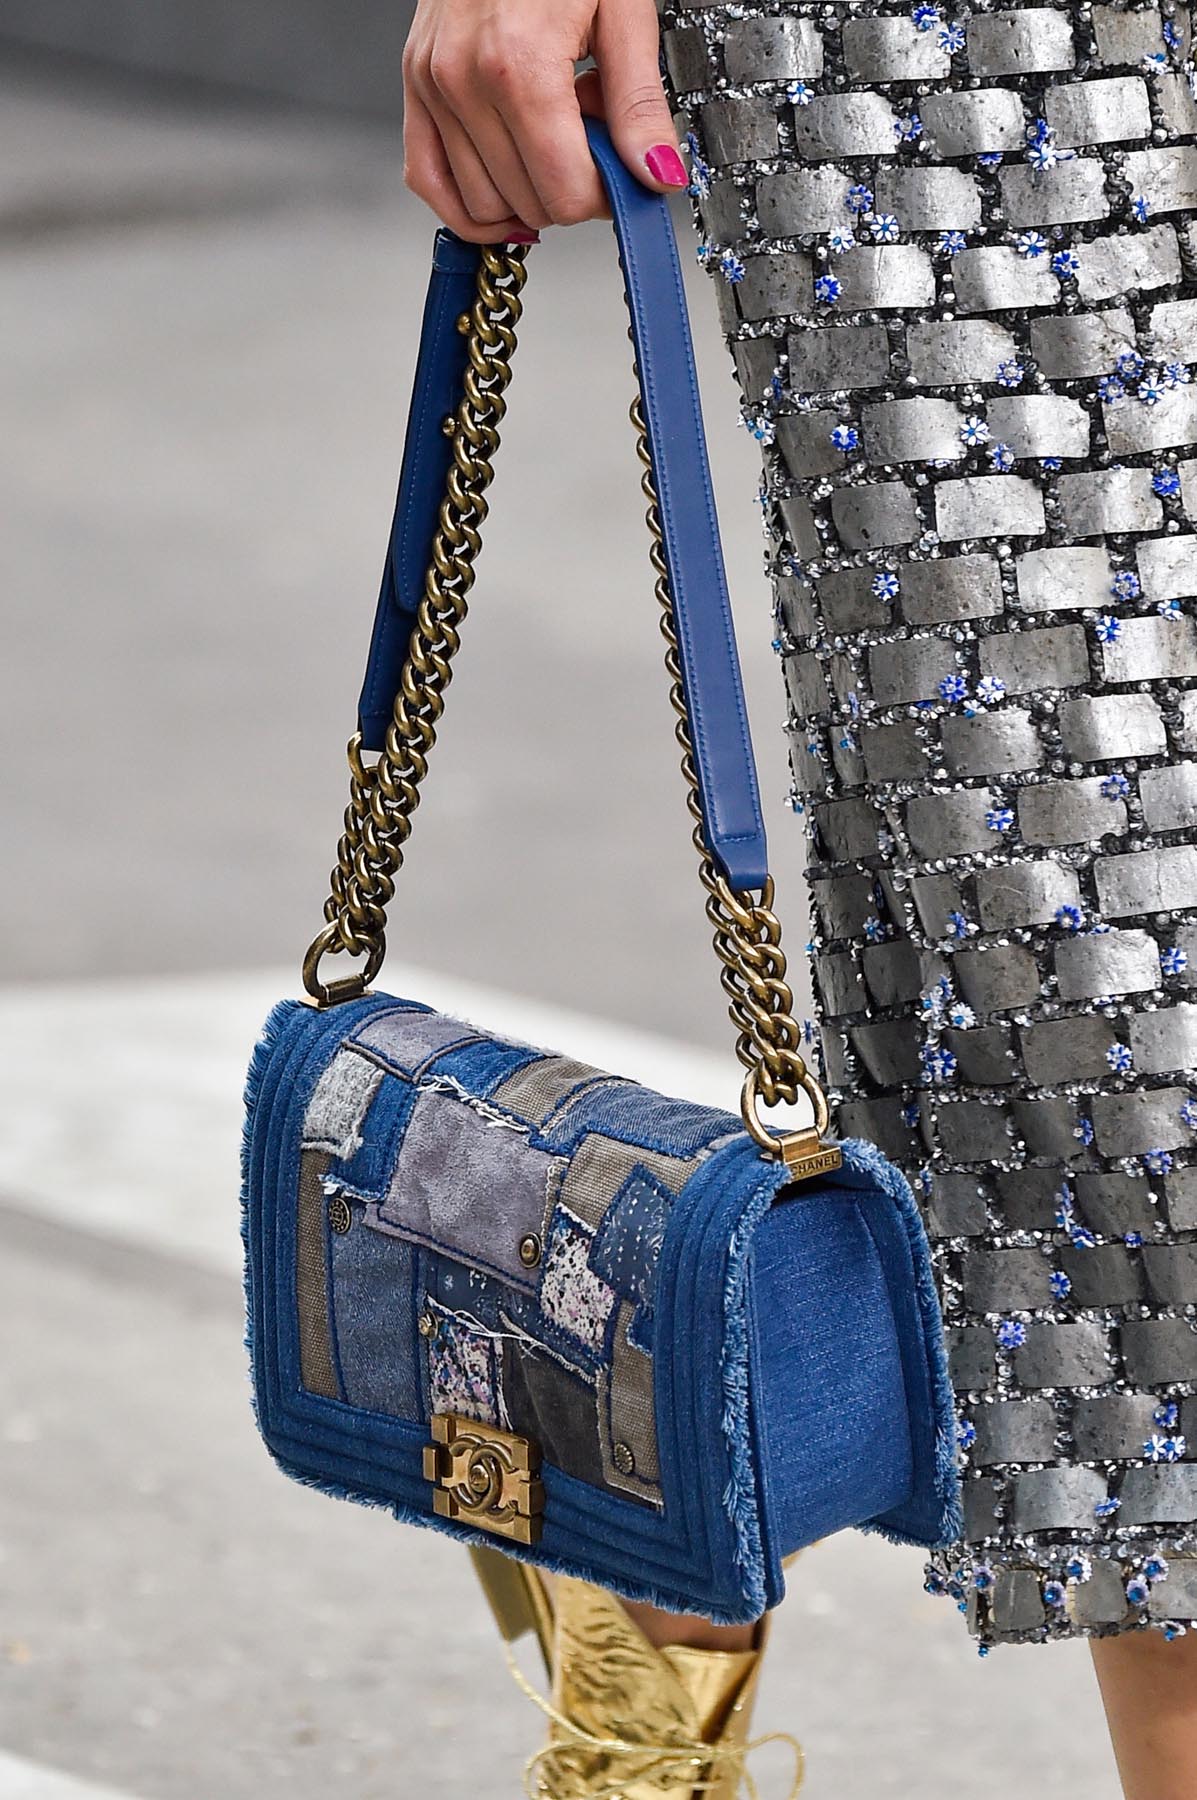 Chanel-detalhes-verao2015-paris-26